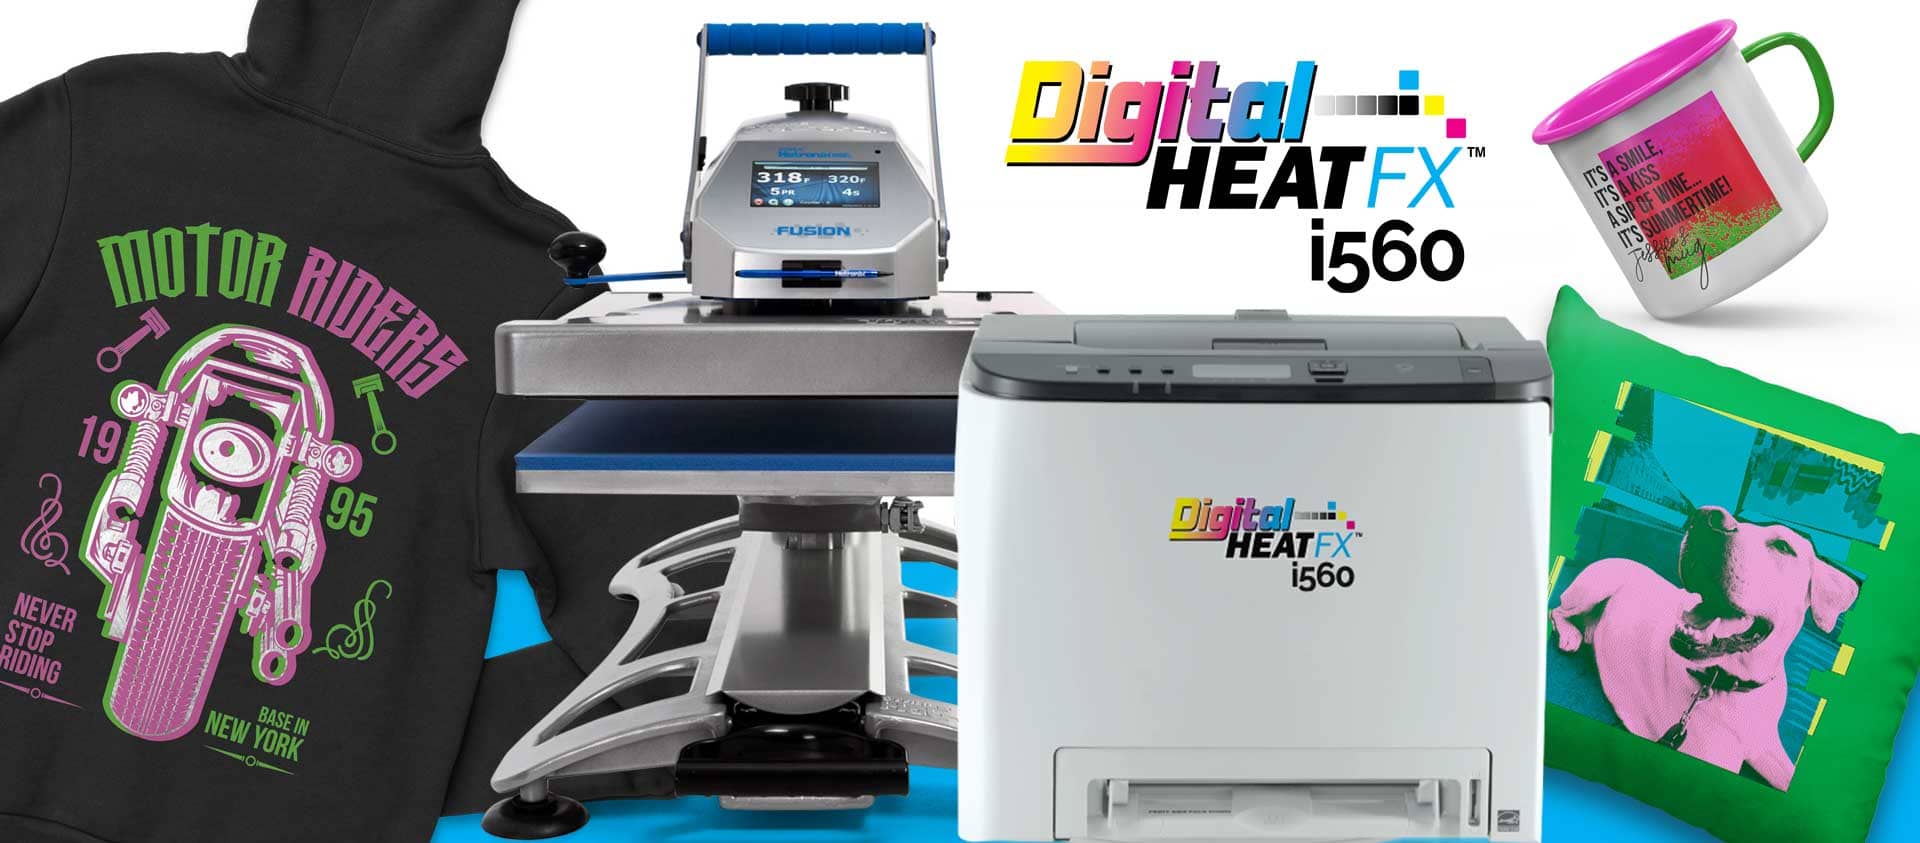 TOP 5 Best Digital Hot Foil Stamping Machine 2023